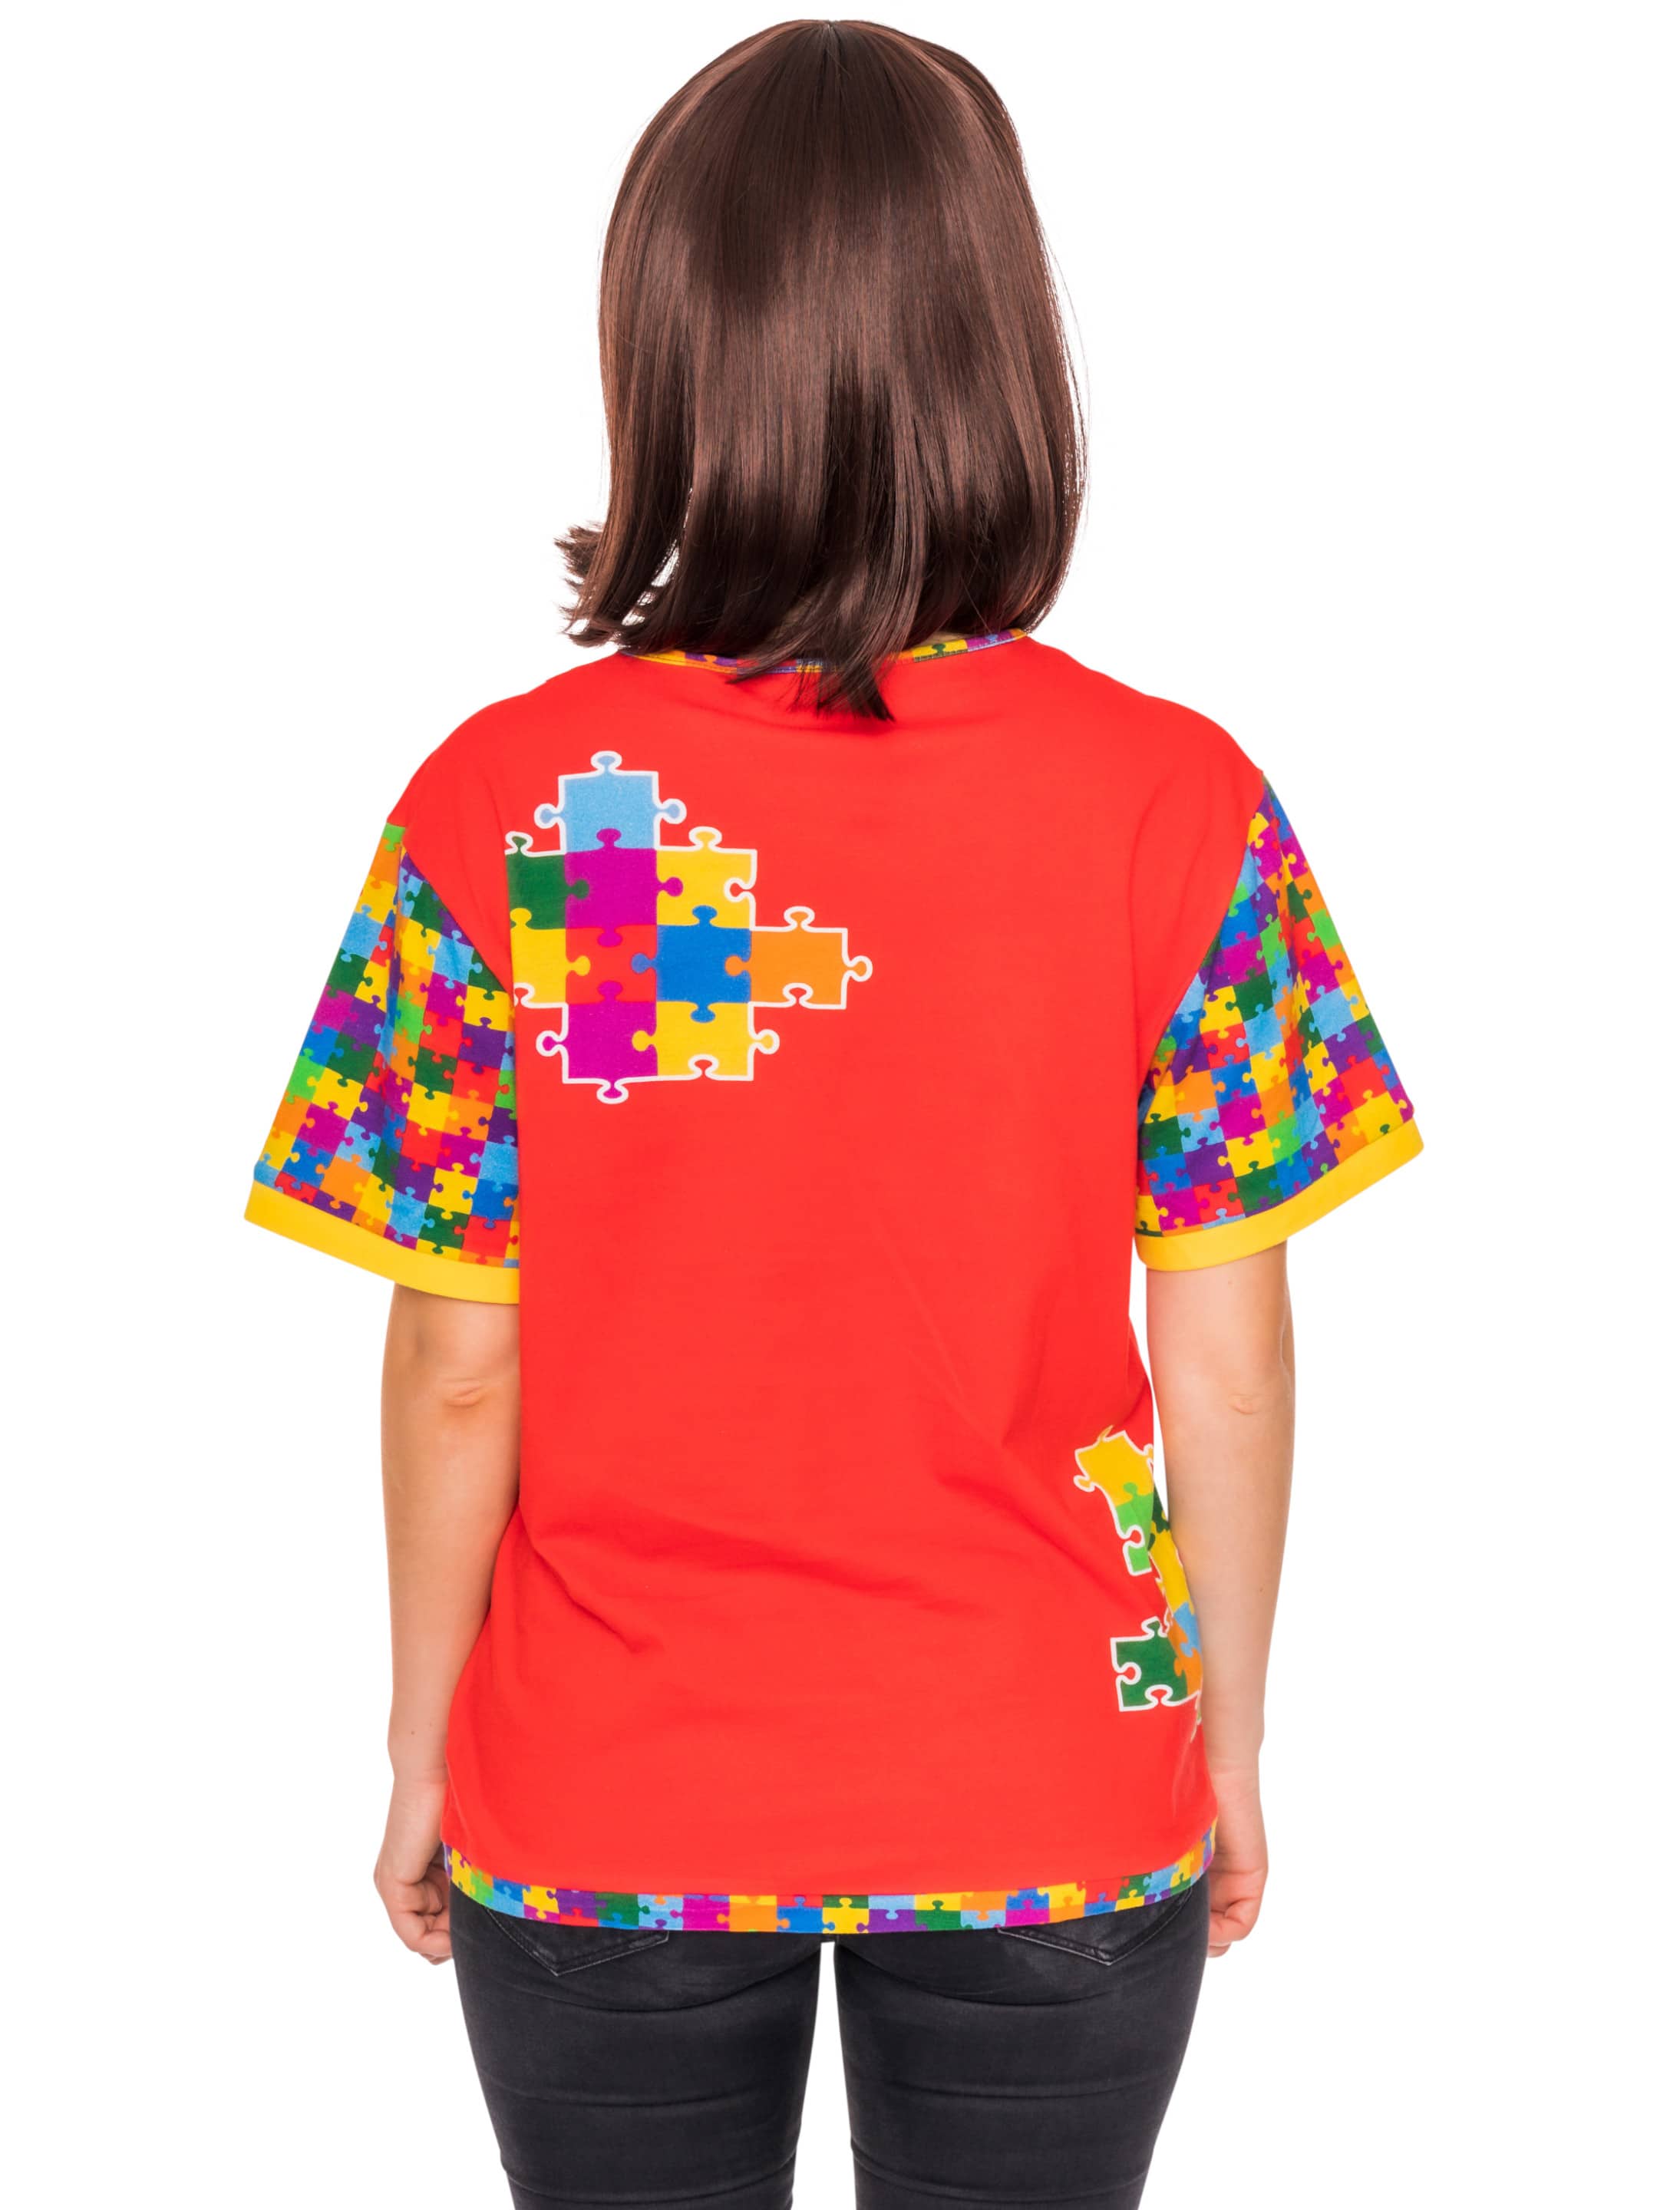 Motto T-Shirt 2020/2021 Unisex mehrfarbig S